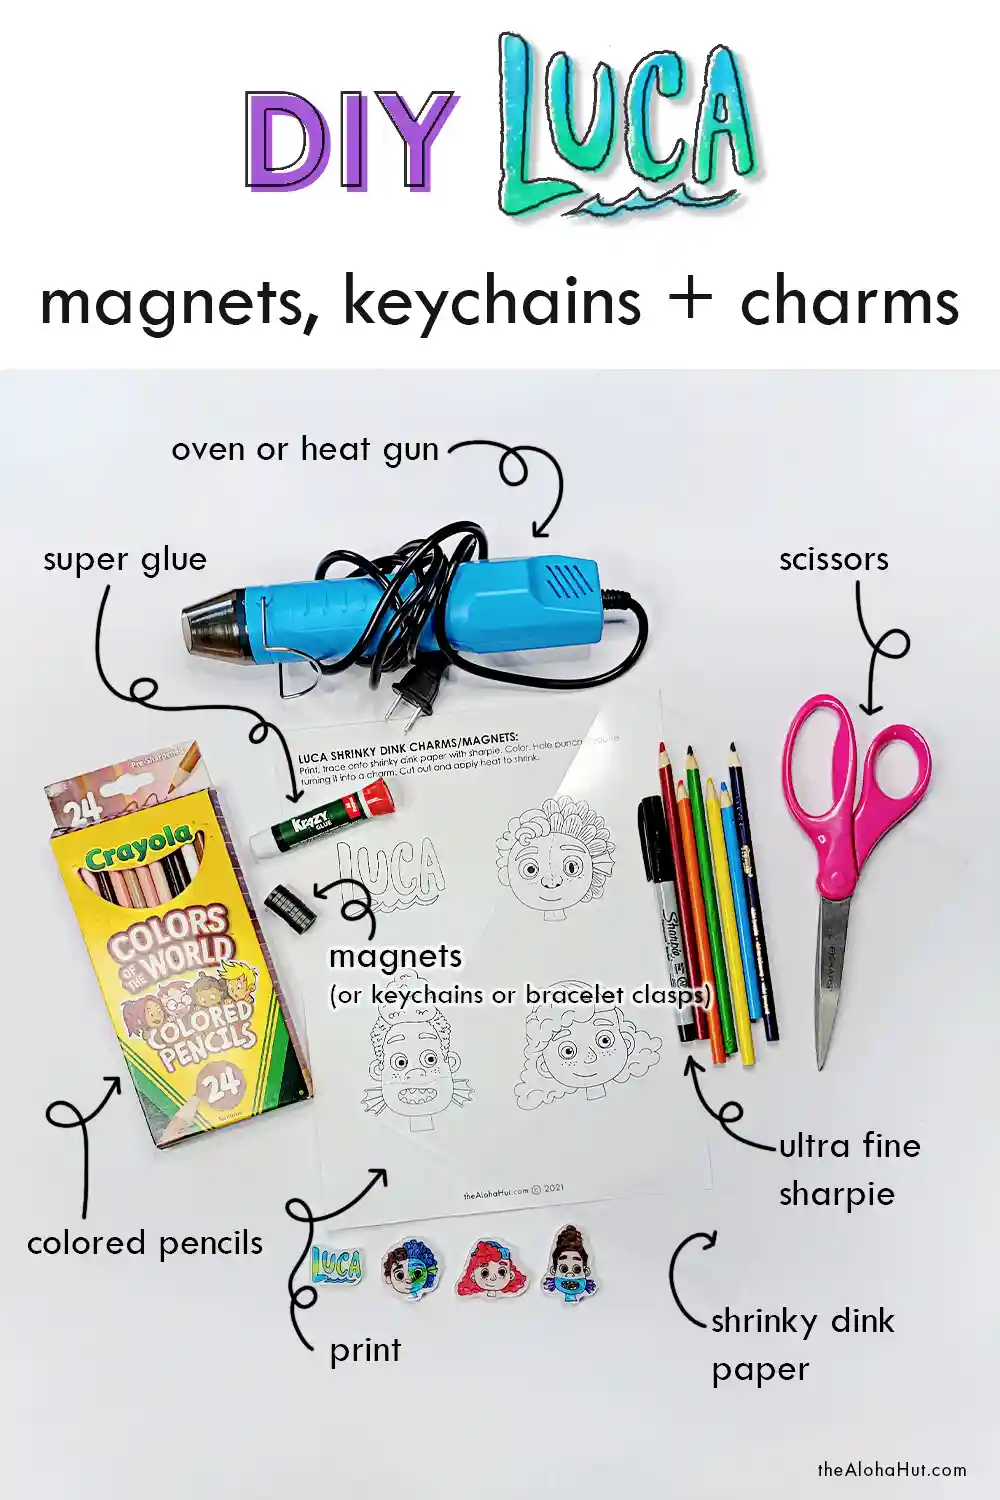 Disney Luca Shrinky Dinks Activity - keychain, fridge magnets, and charms